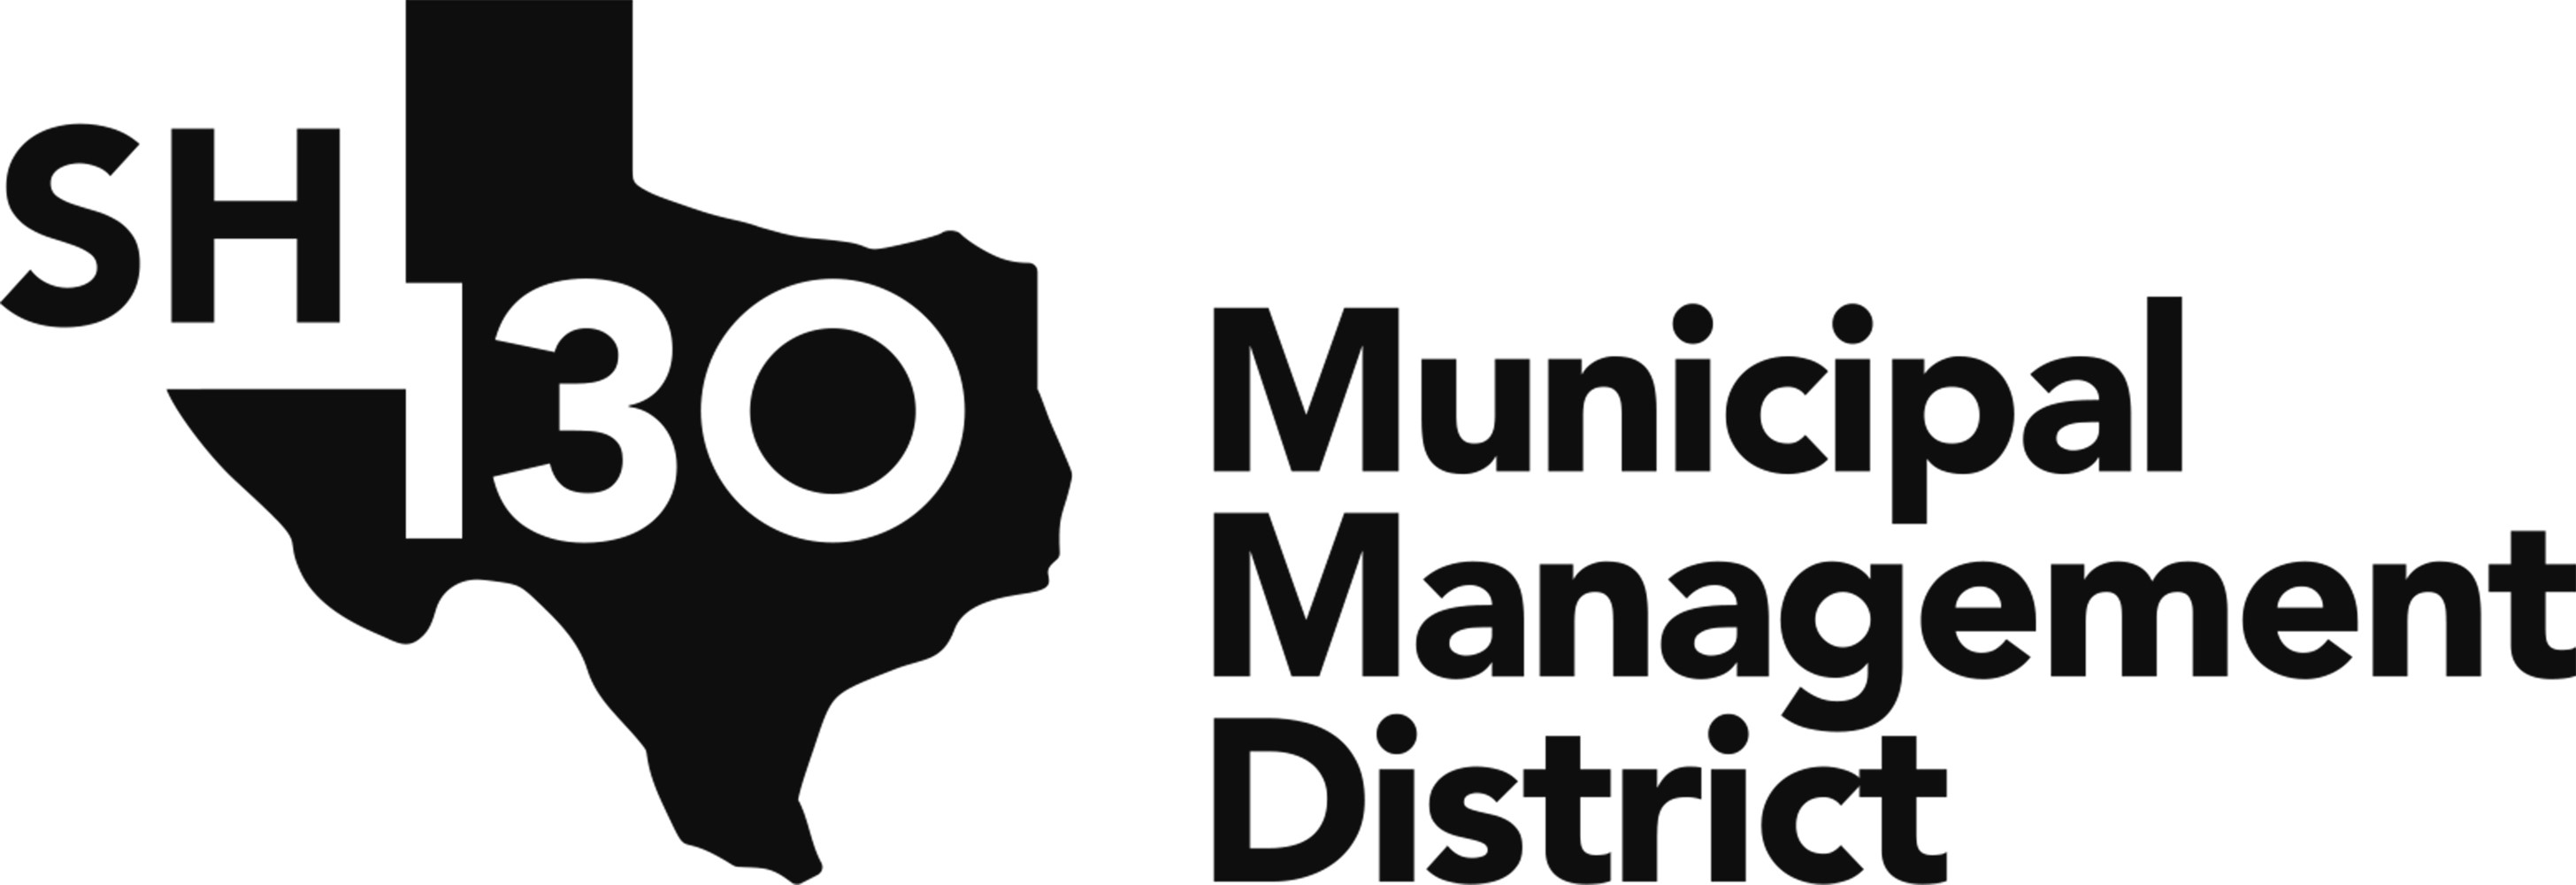 SH 130 Municipal Management District No. 1 Logo